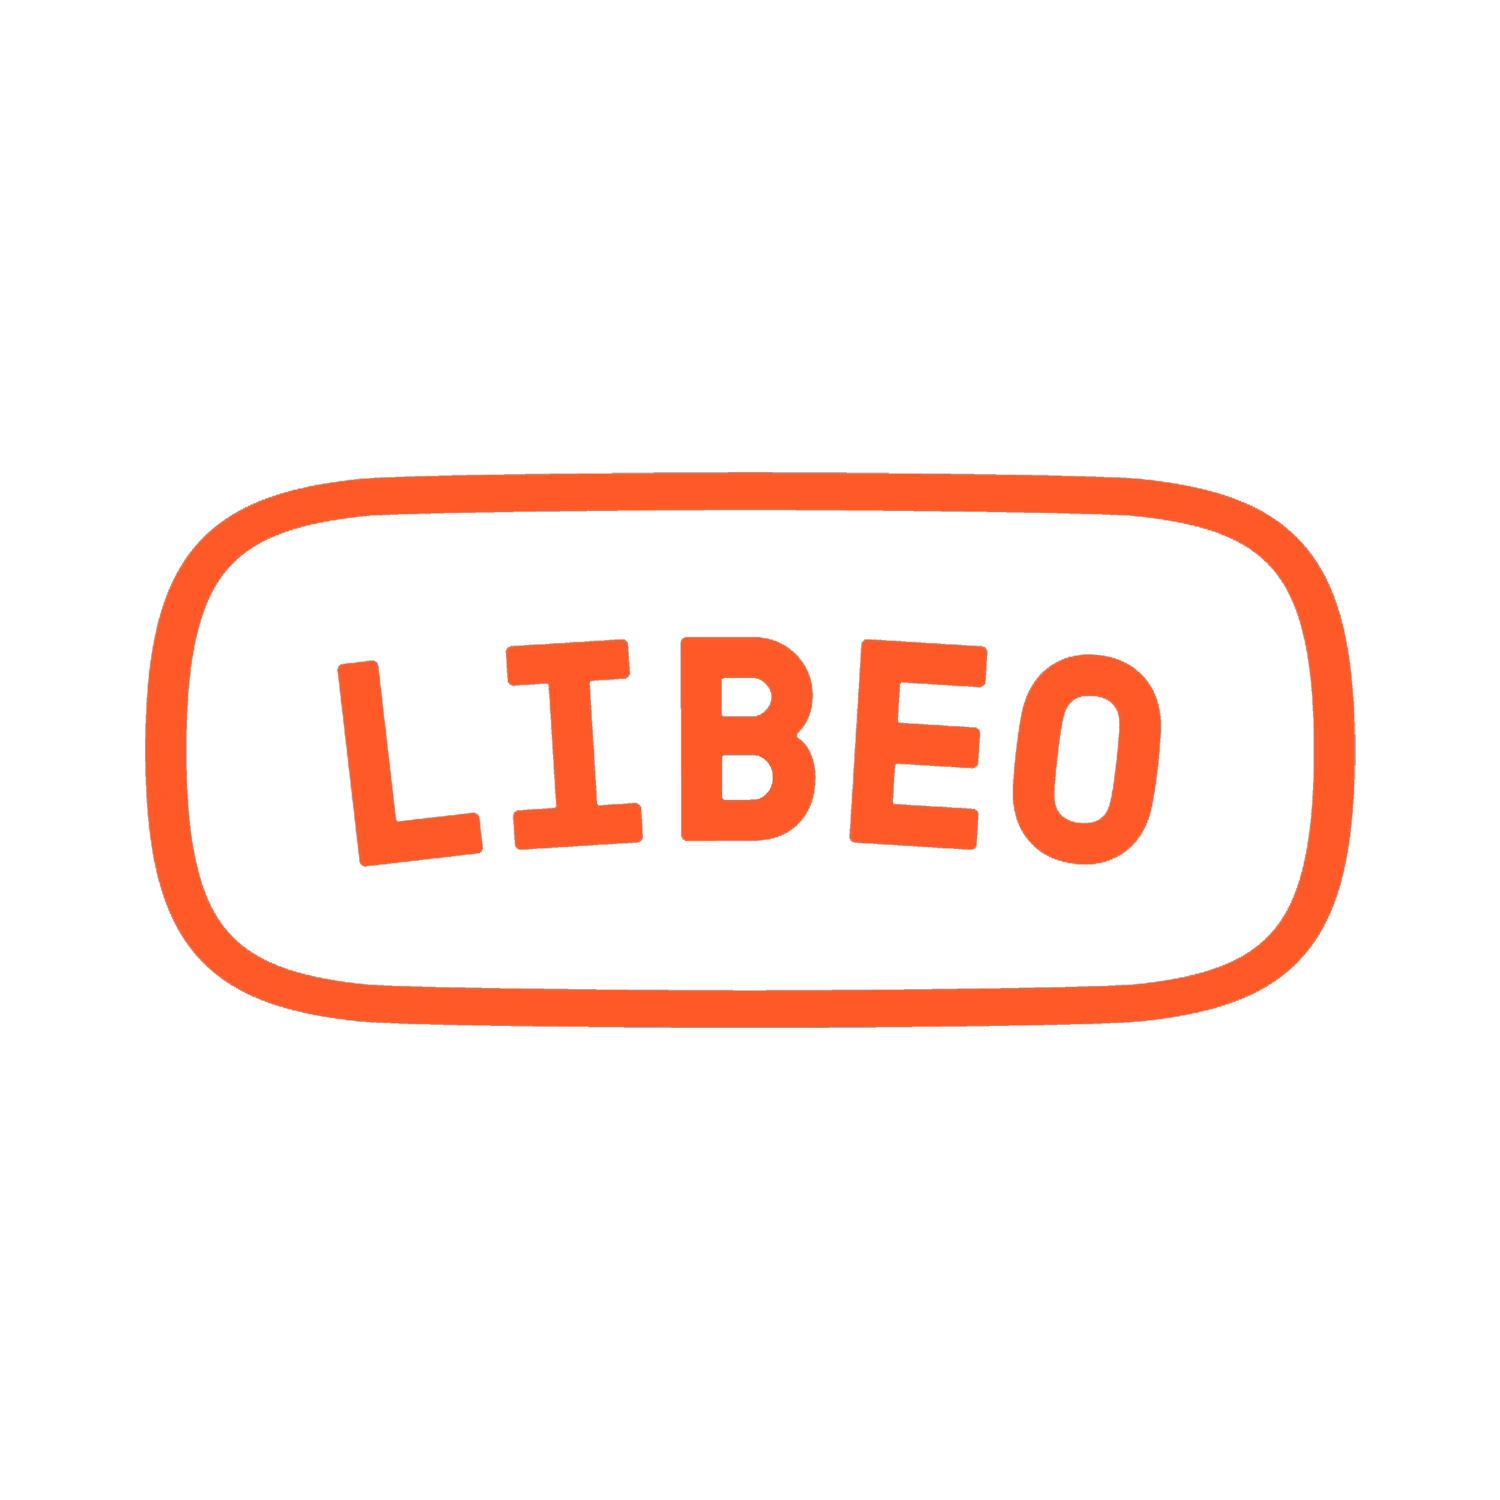 Libeo logo